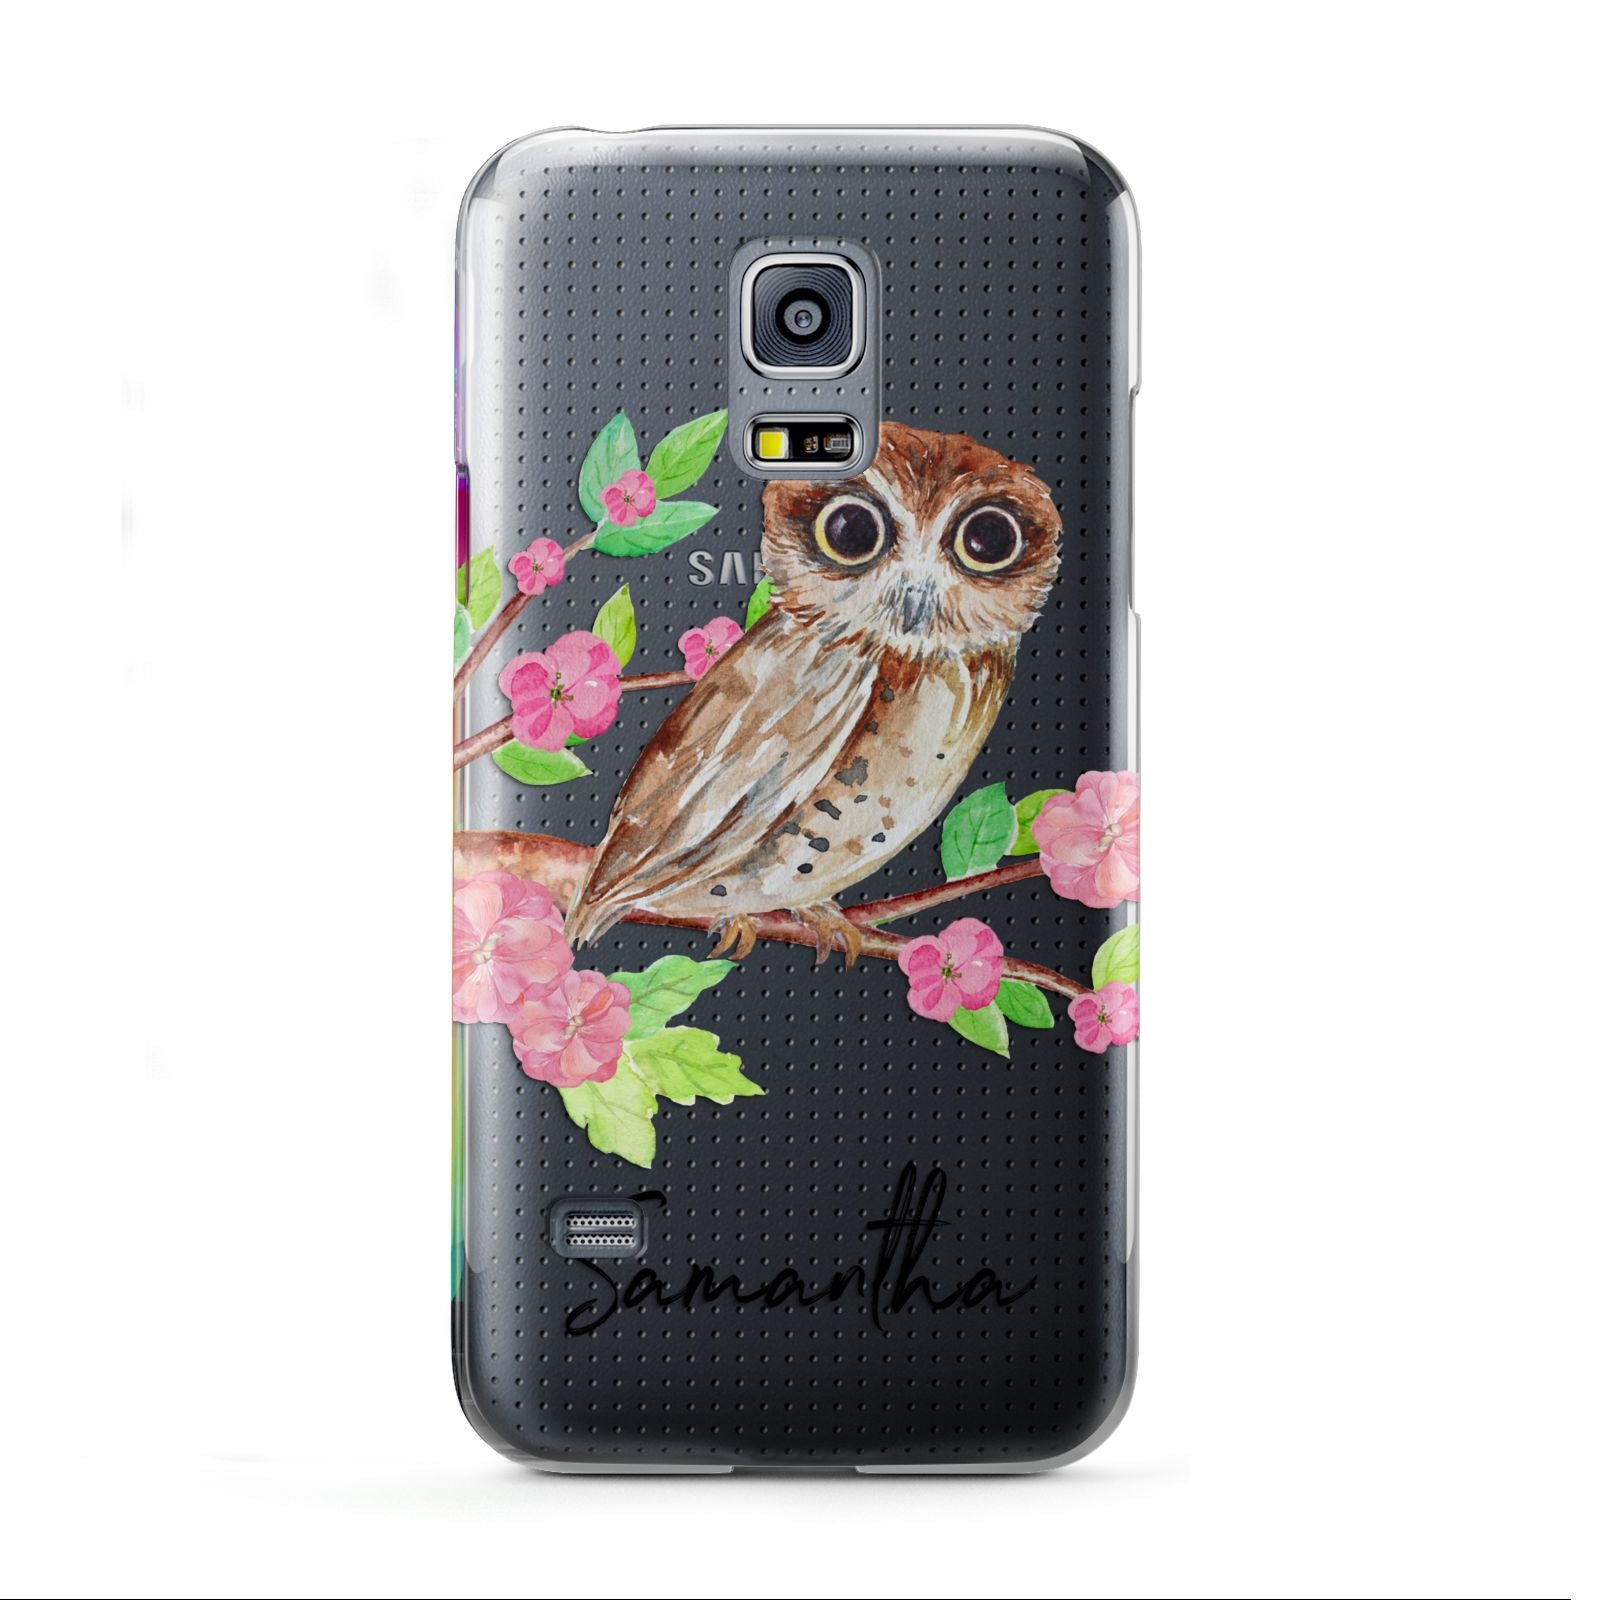 Personalised Owl Samsung Galaxy S5 Mini Case